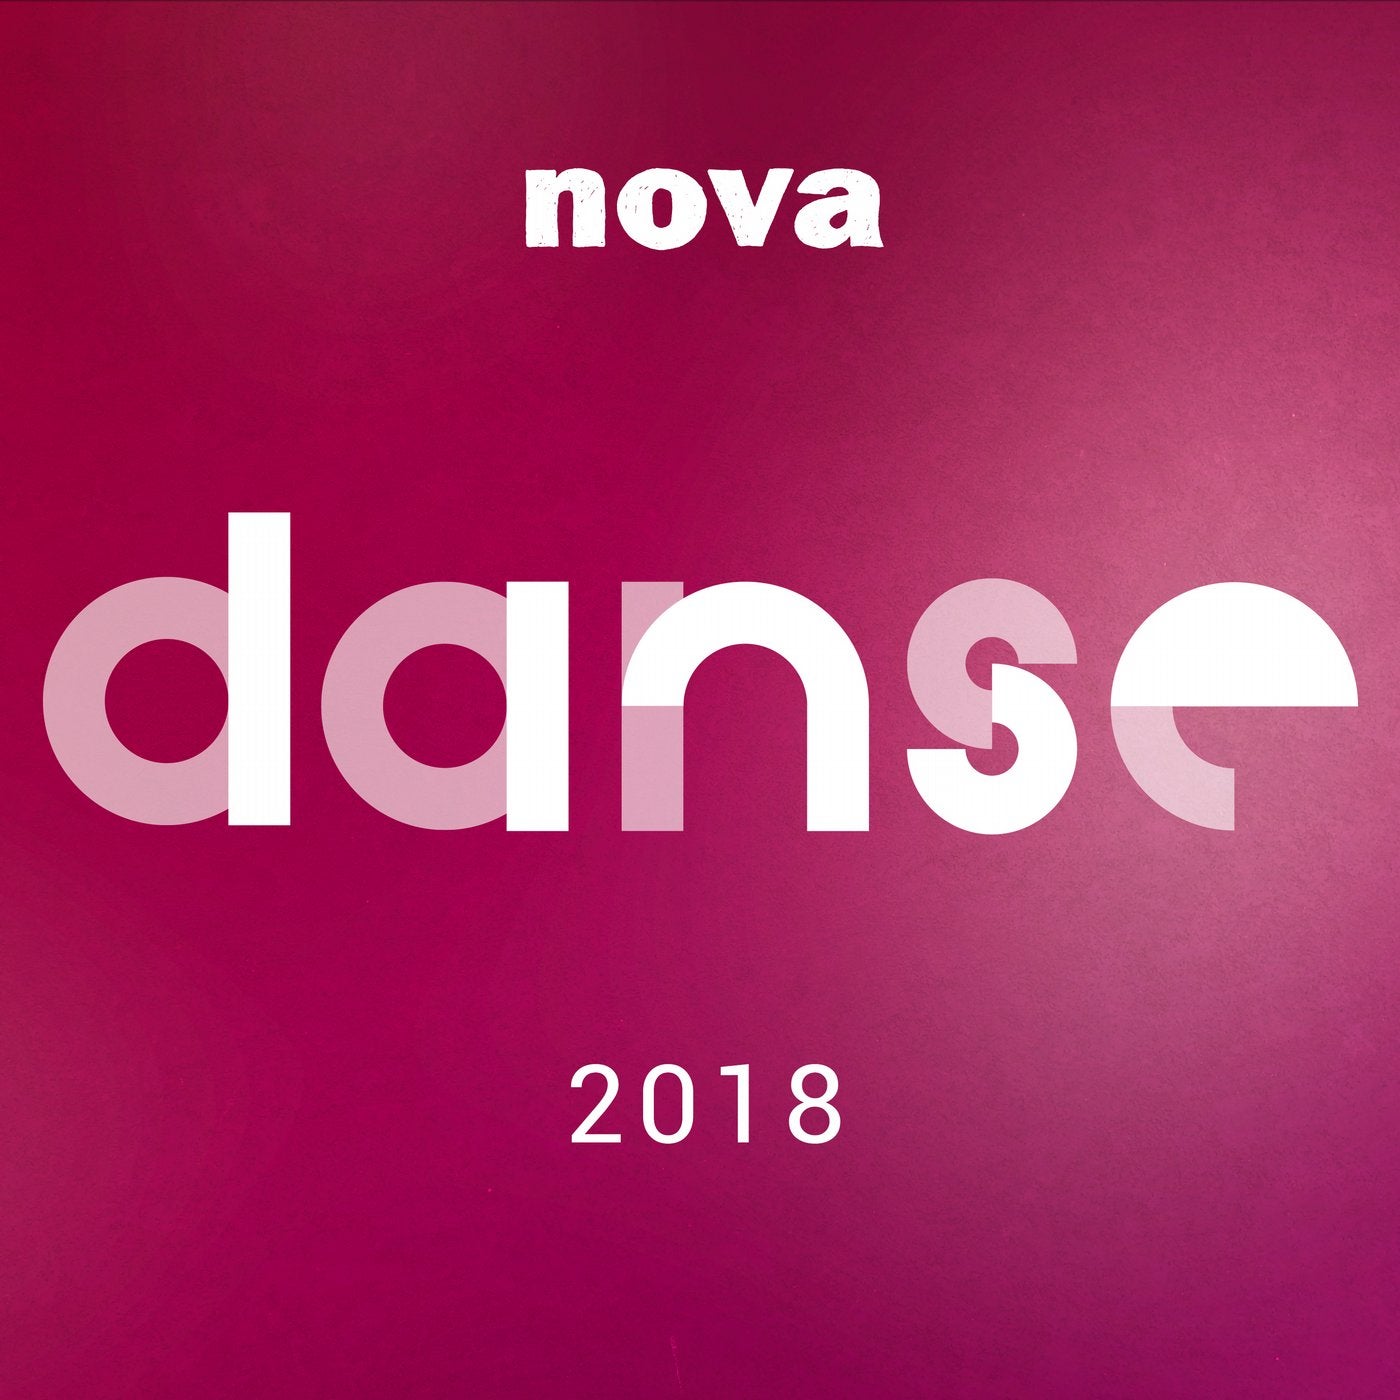 Nova Danse 2018